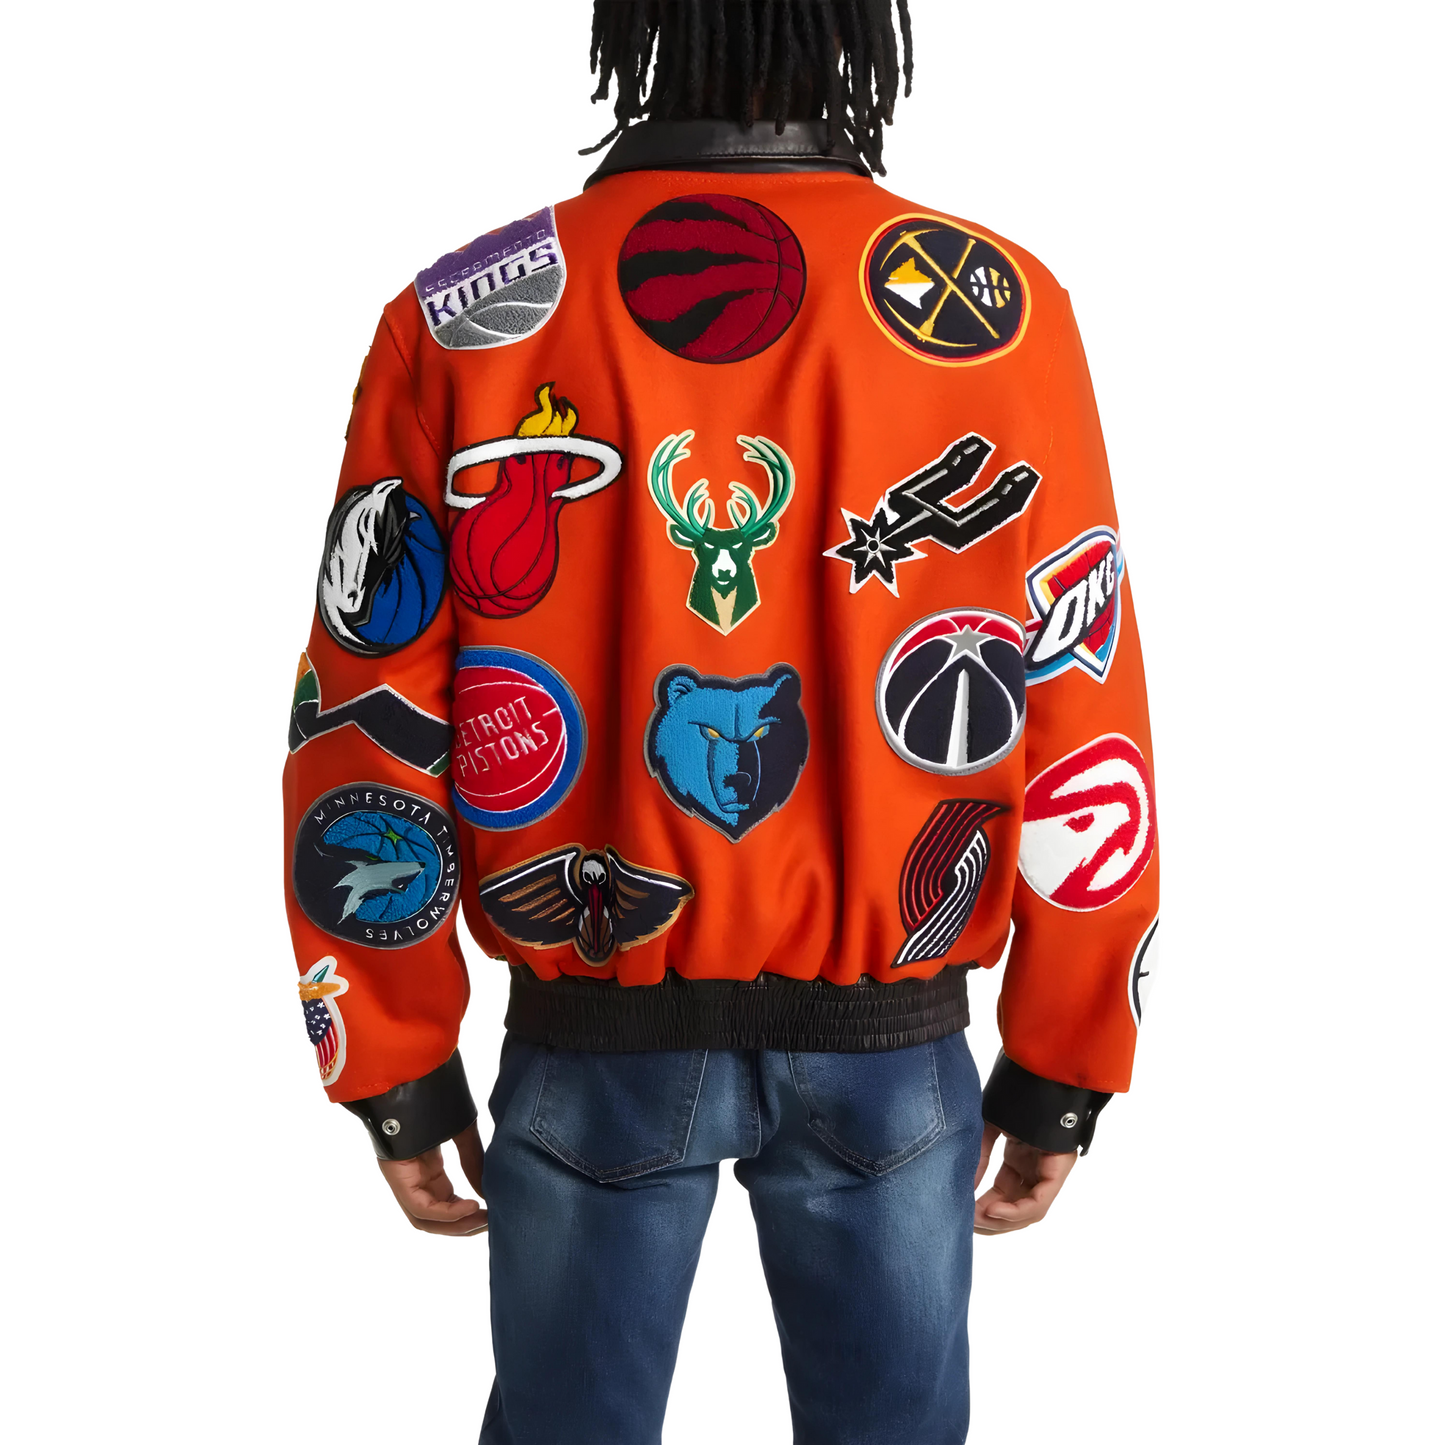 Jeff Hamilton NBA Collage Wool Blend Jacket